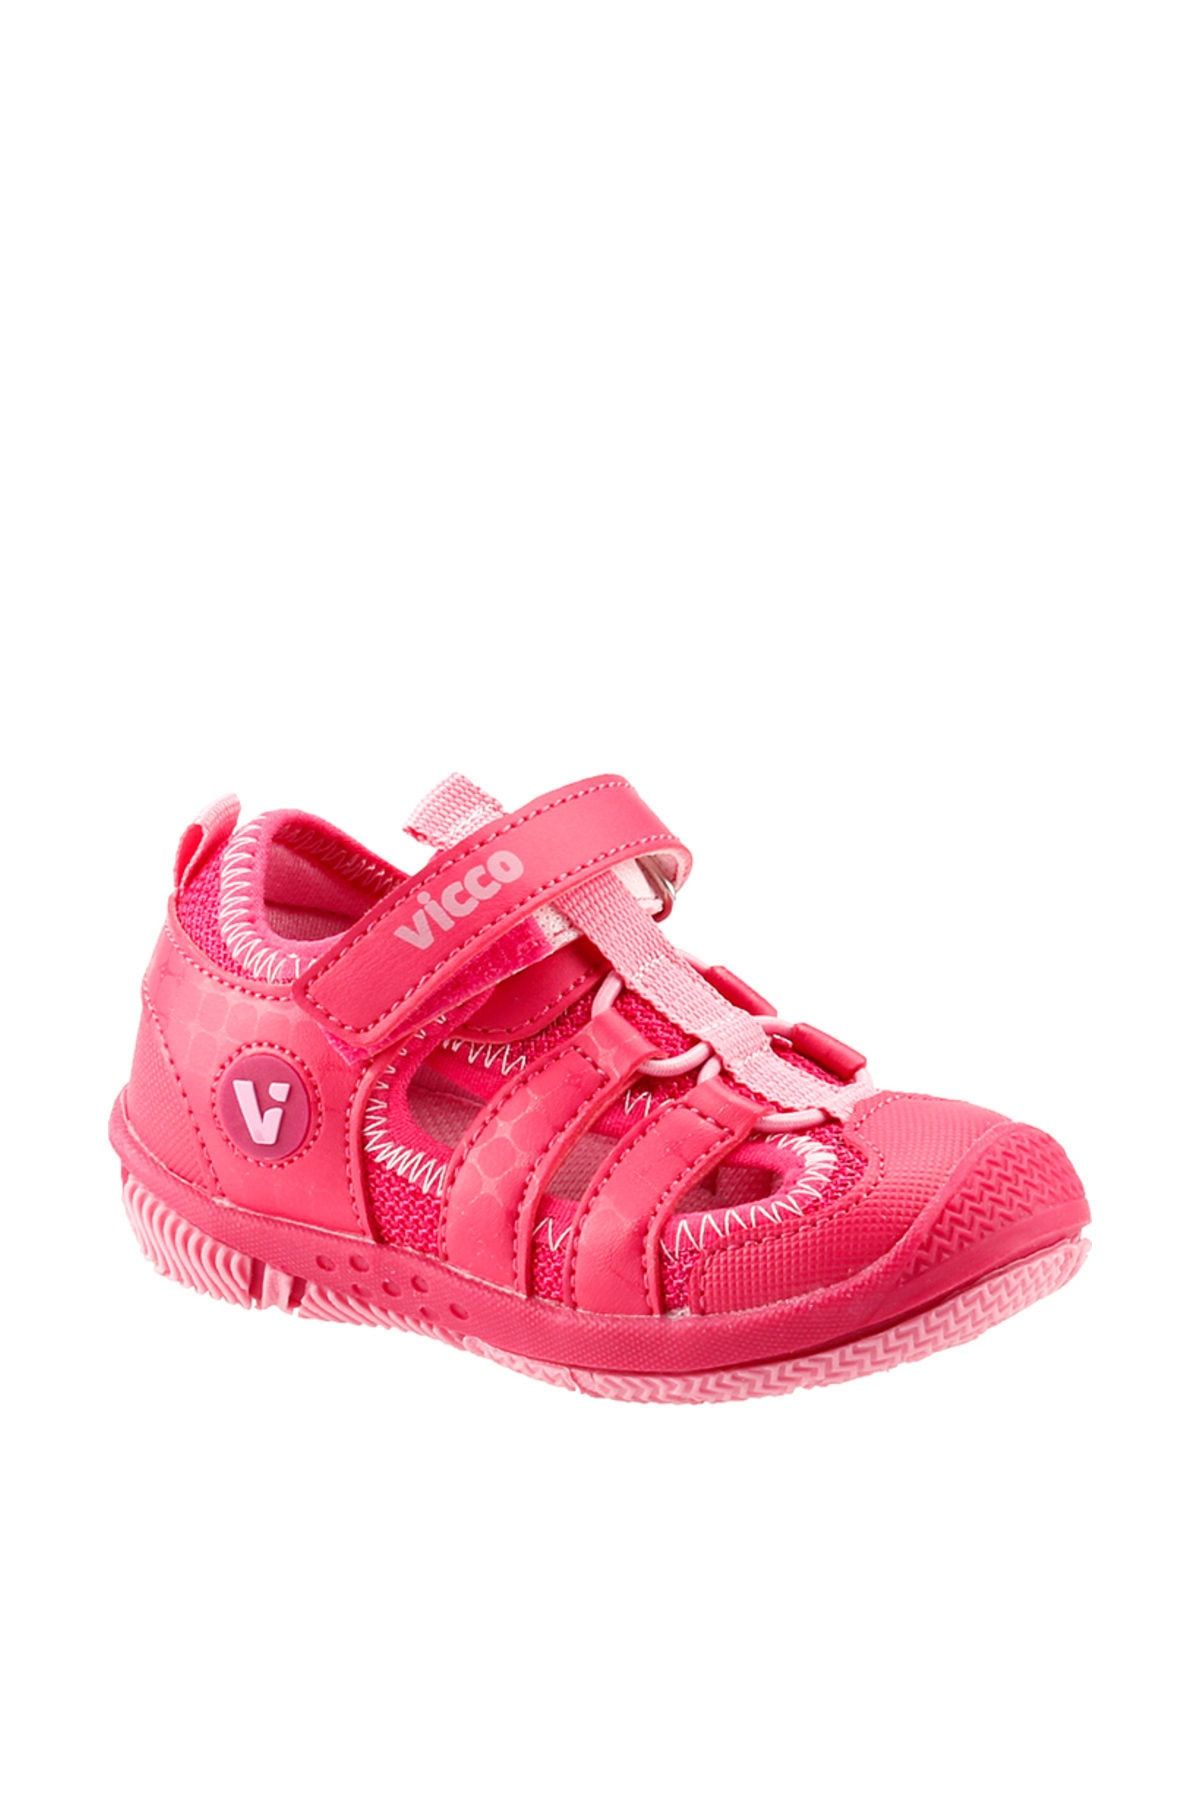 Vicco Fuşya Kız Çocuk Sandalet 18A02674